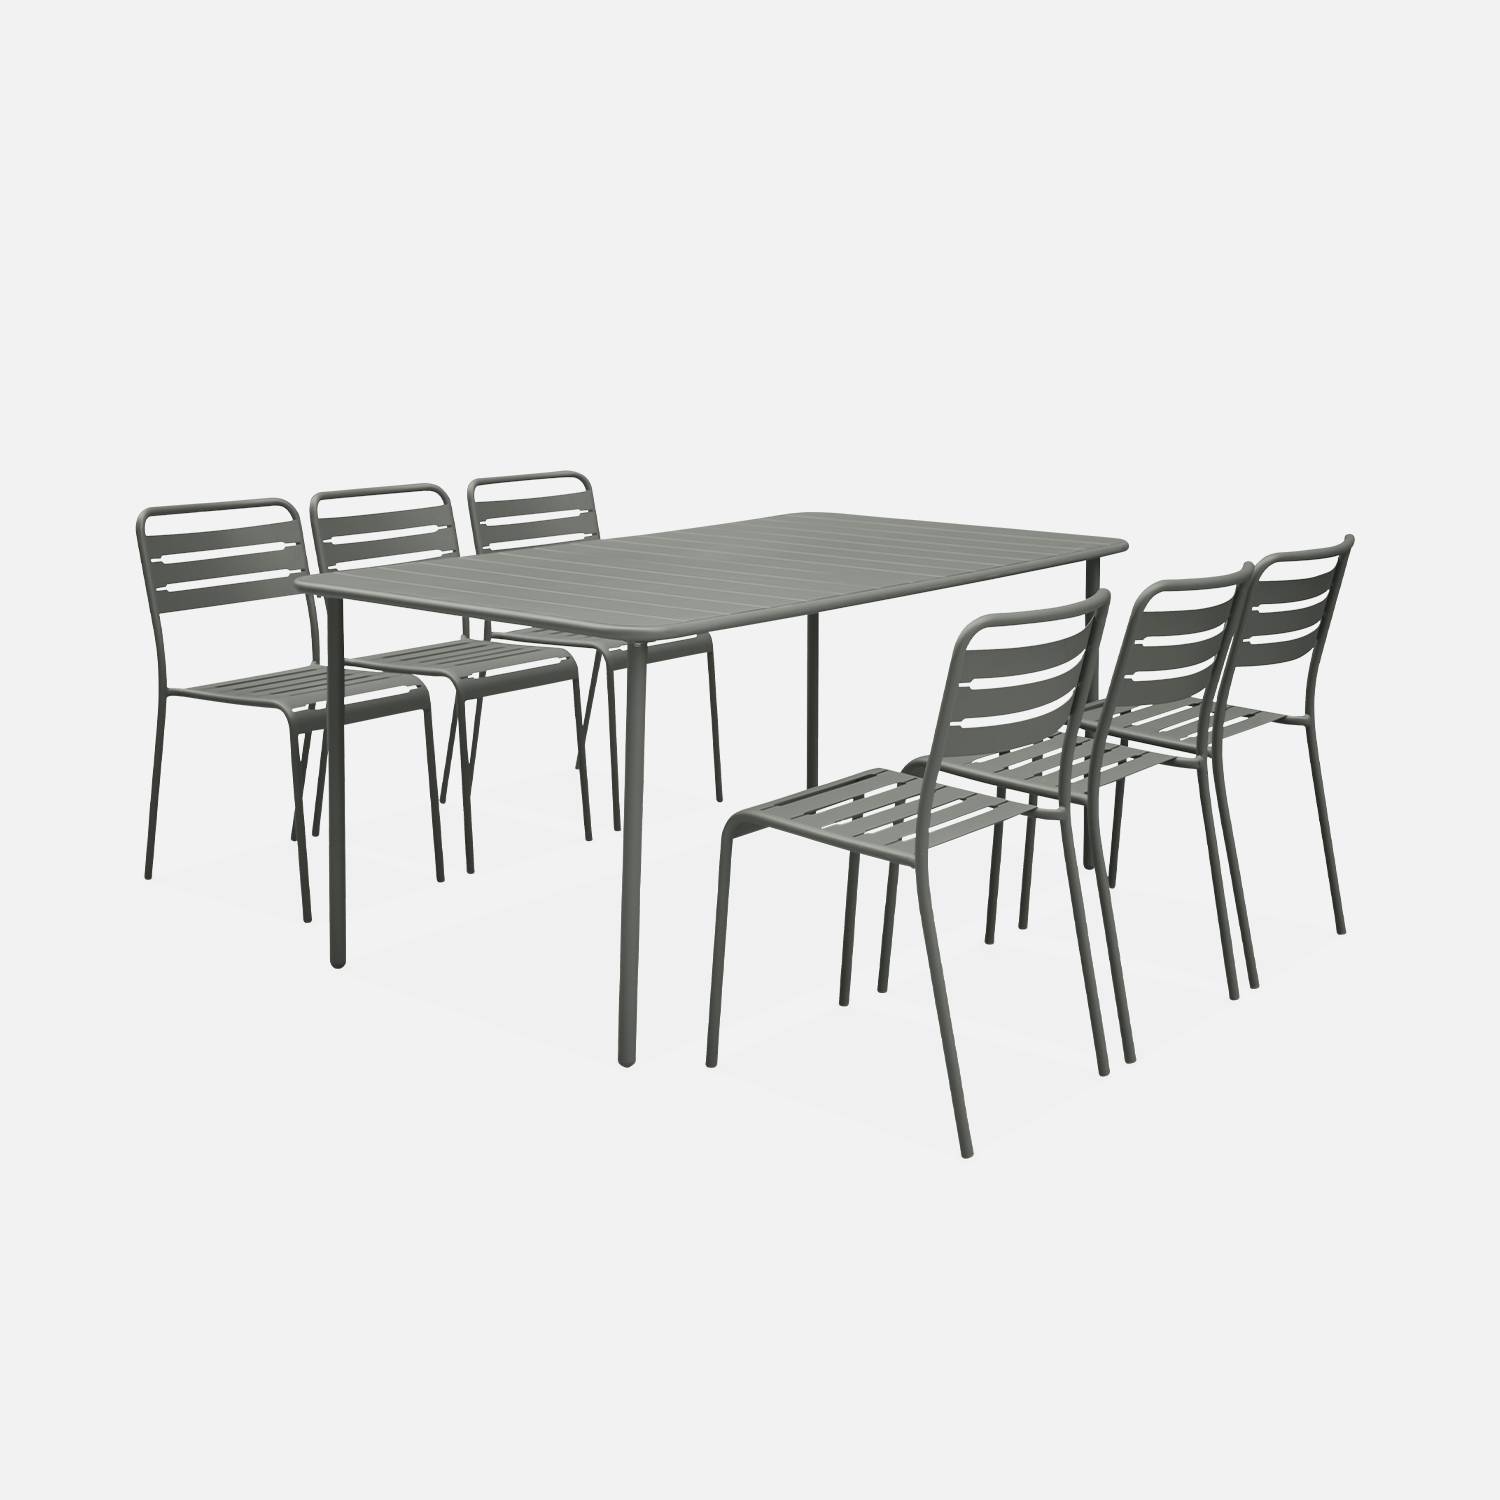 6-8 seater rectangular steel garden table set with chairs, 160cm, khaki green